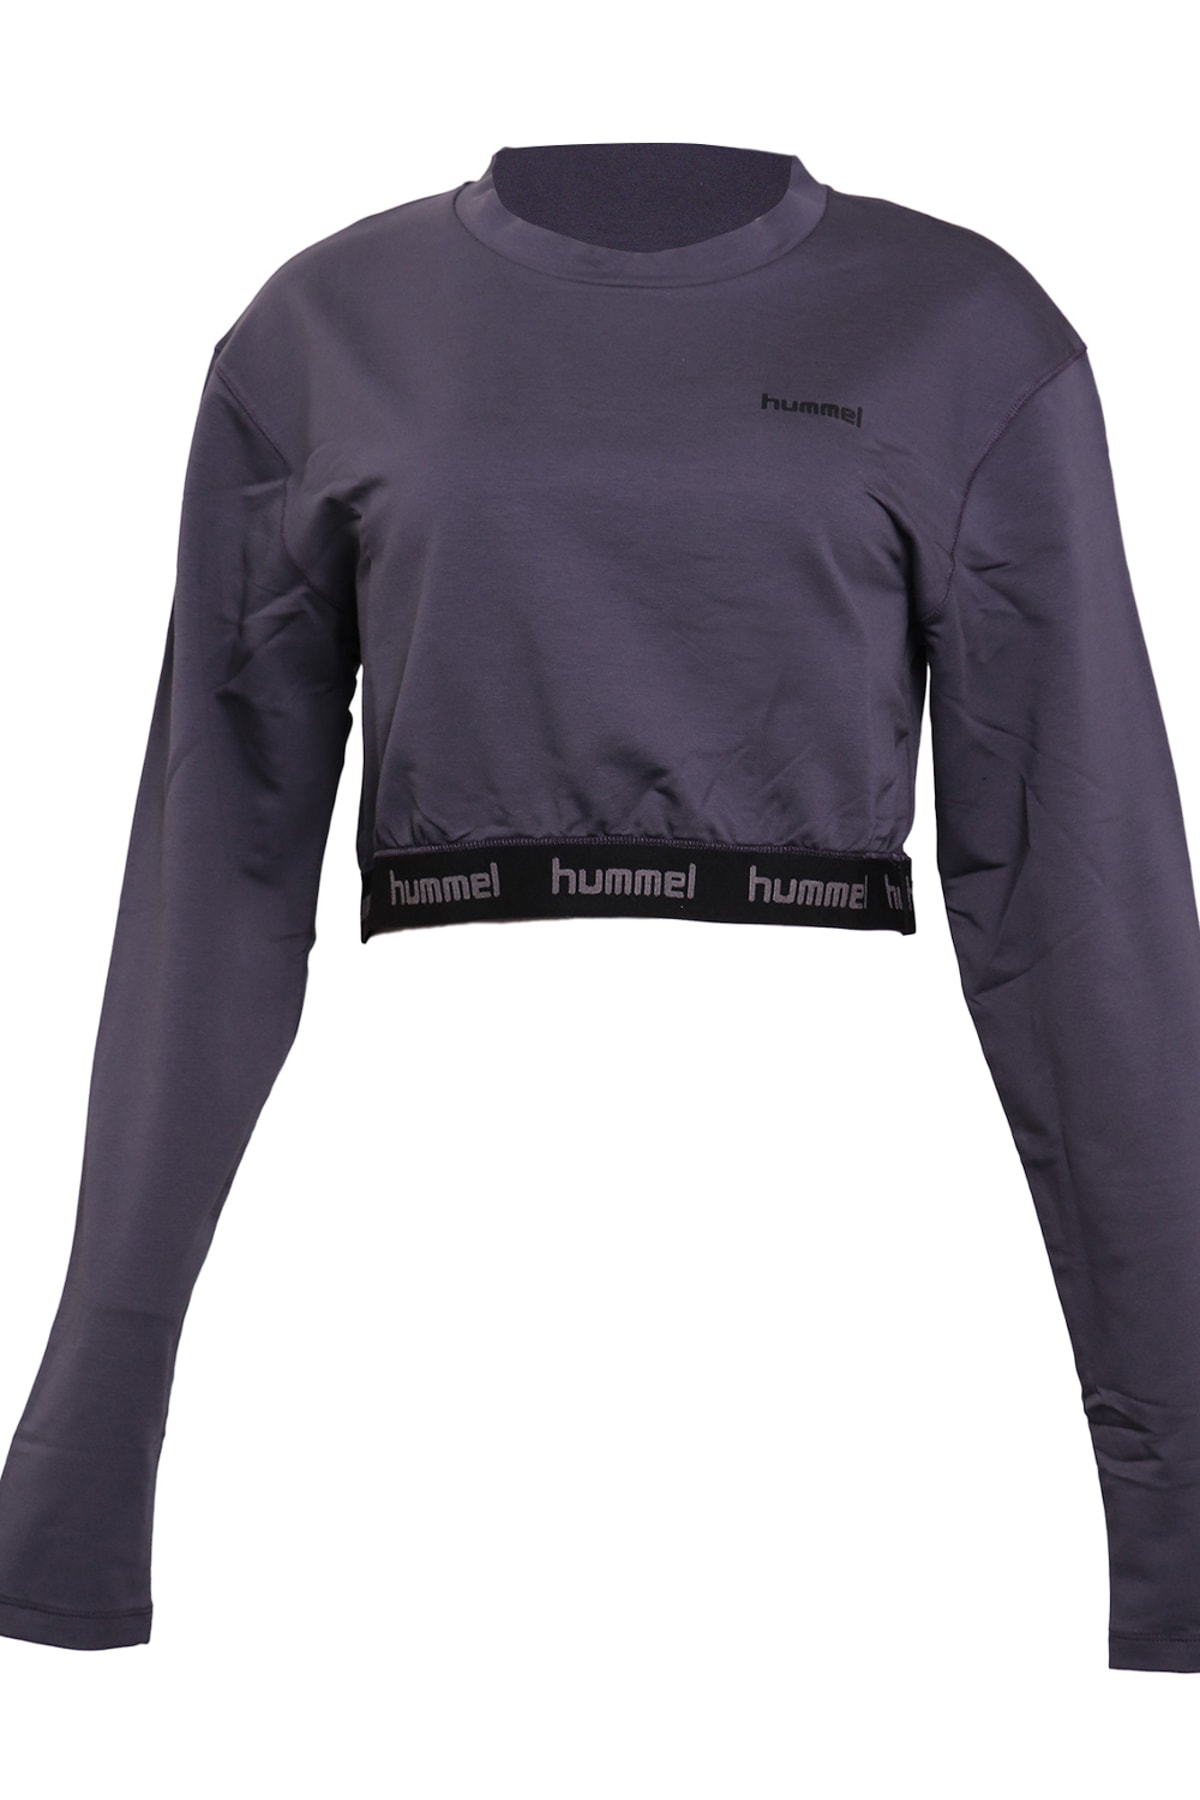 HUMMEL Kadın Sweatshirt - Hmltogo Sweat Shirt